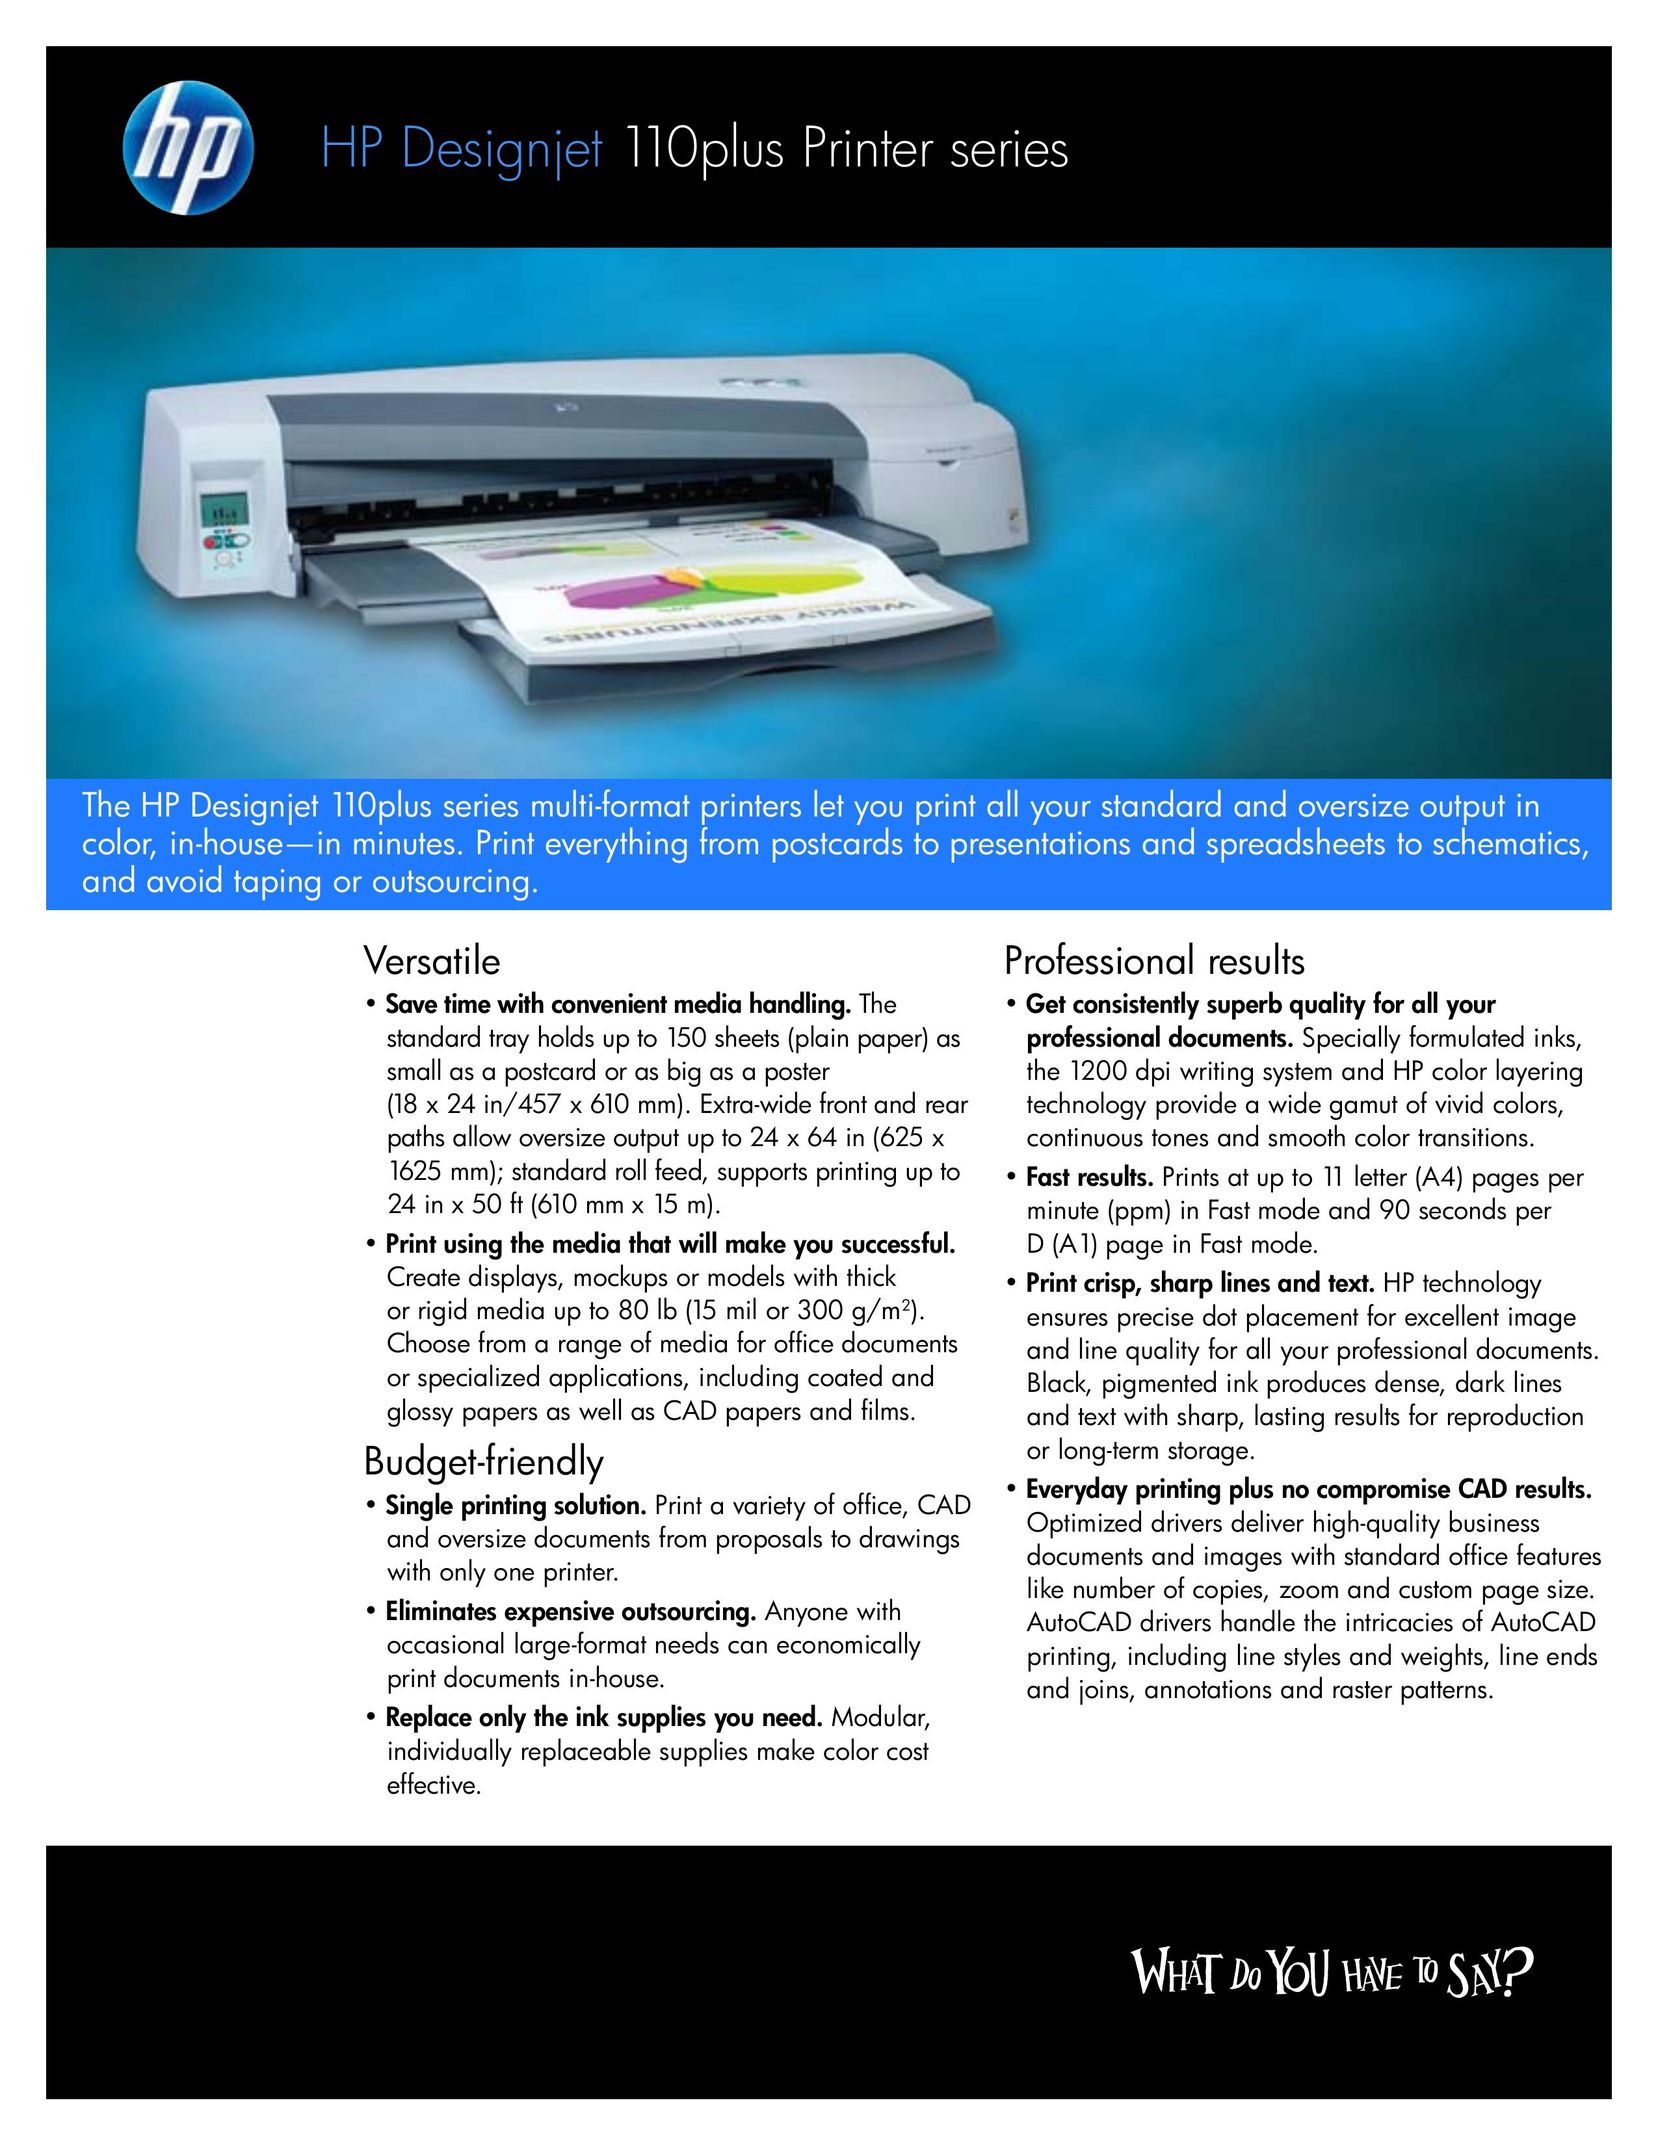 HP (Hewlett-Packard) 110PLUS All in One Printer User Manual